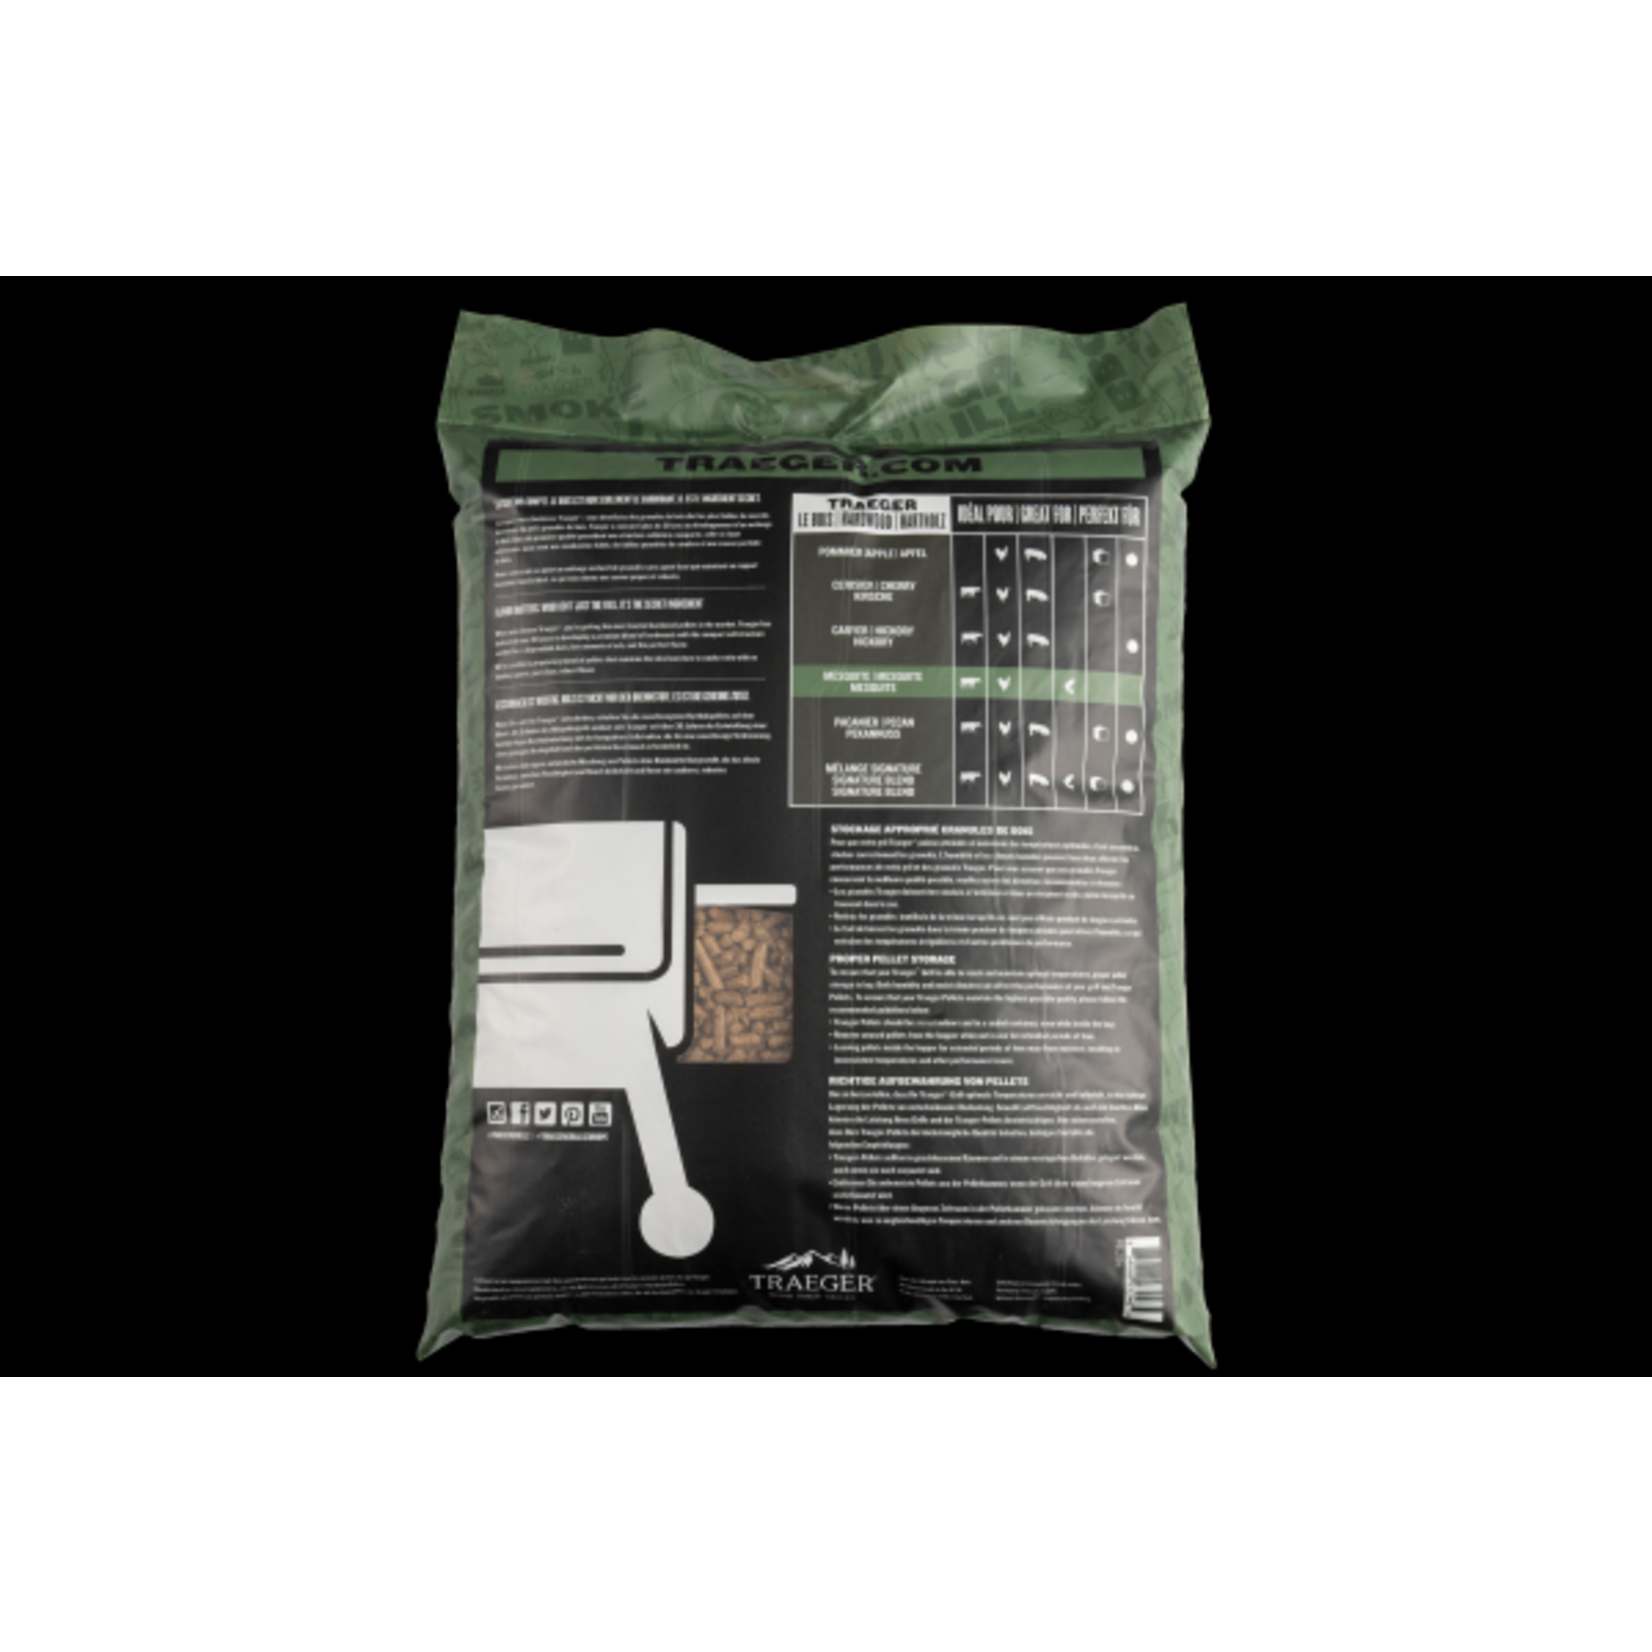 Traeger Multilingual - Mesquite Pellets 9 kg Bag